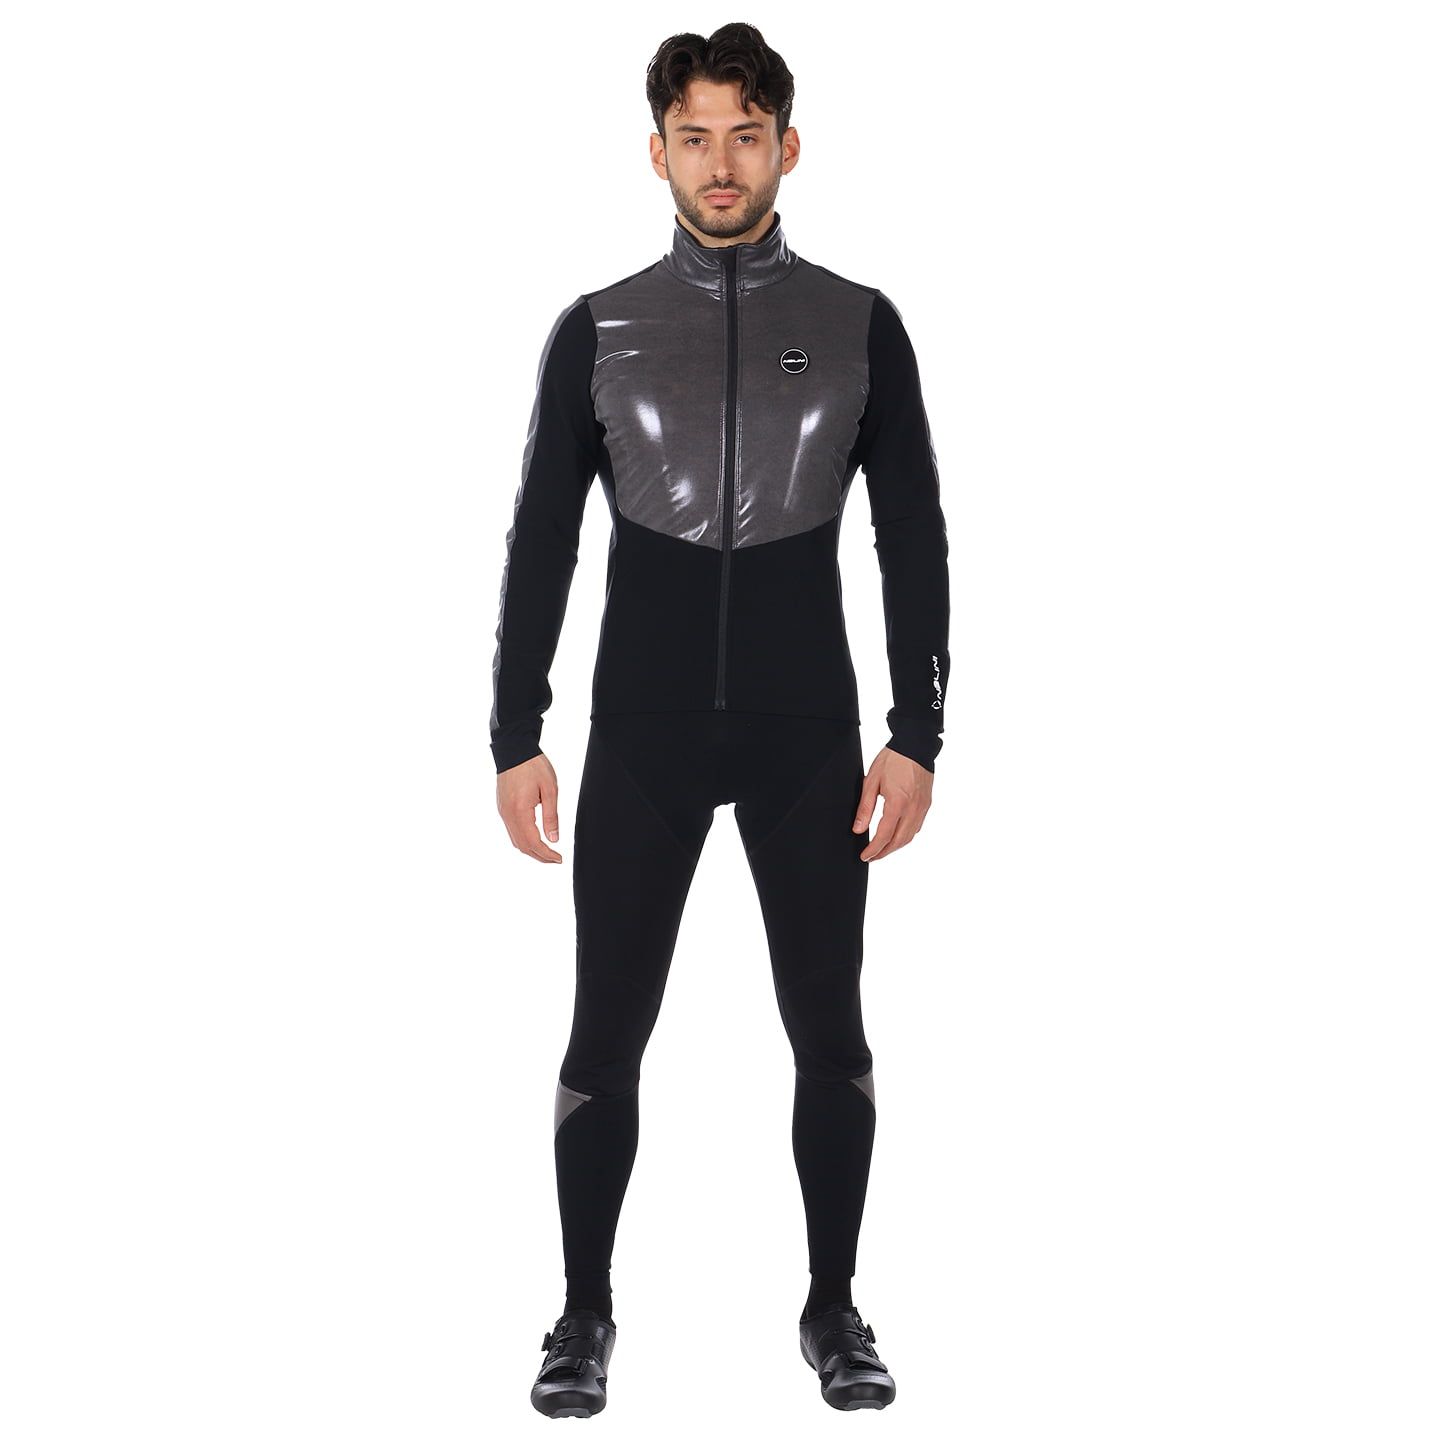 NALINI New Warm Reflex Set (winter jacket + cycling tights) Set (2 pieces), for men